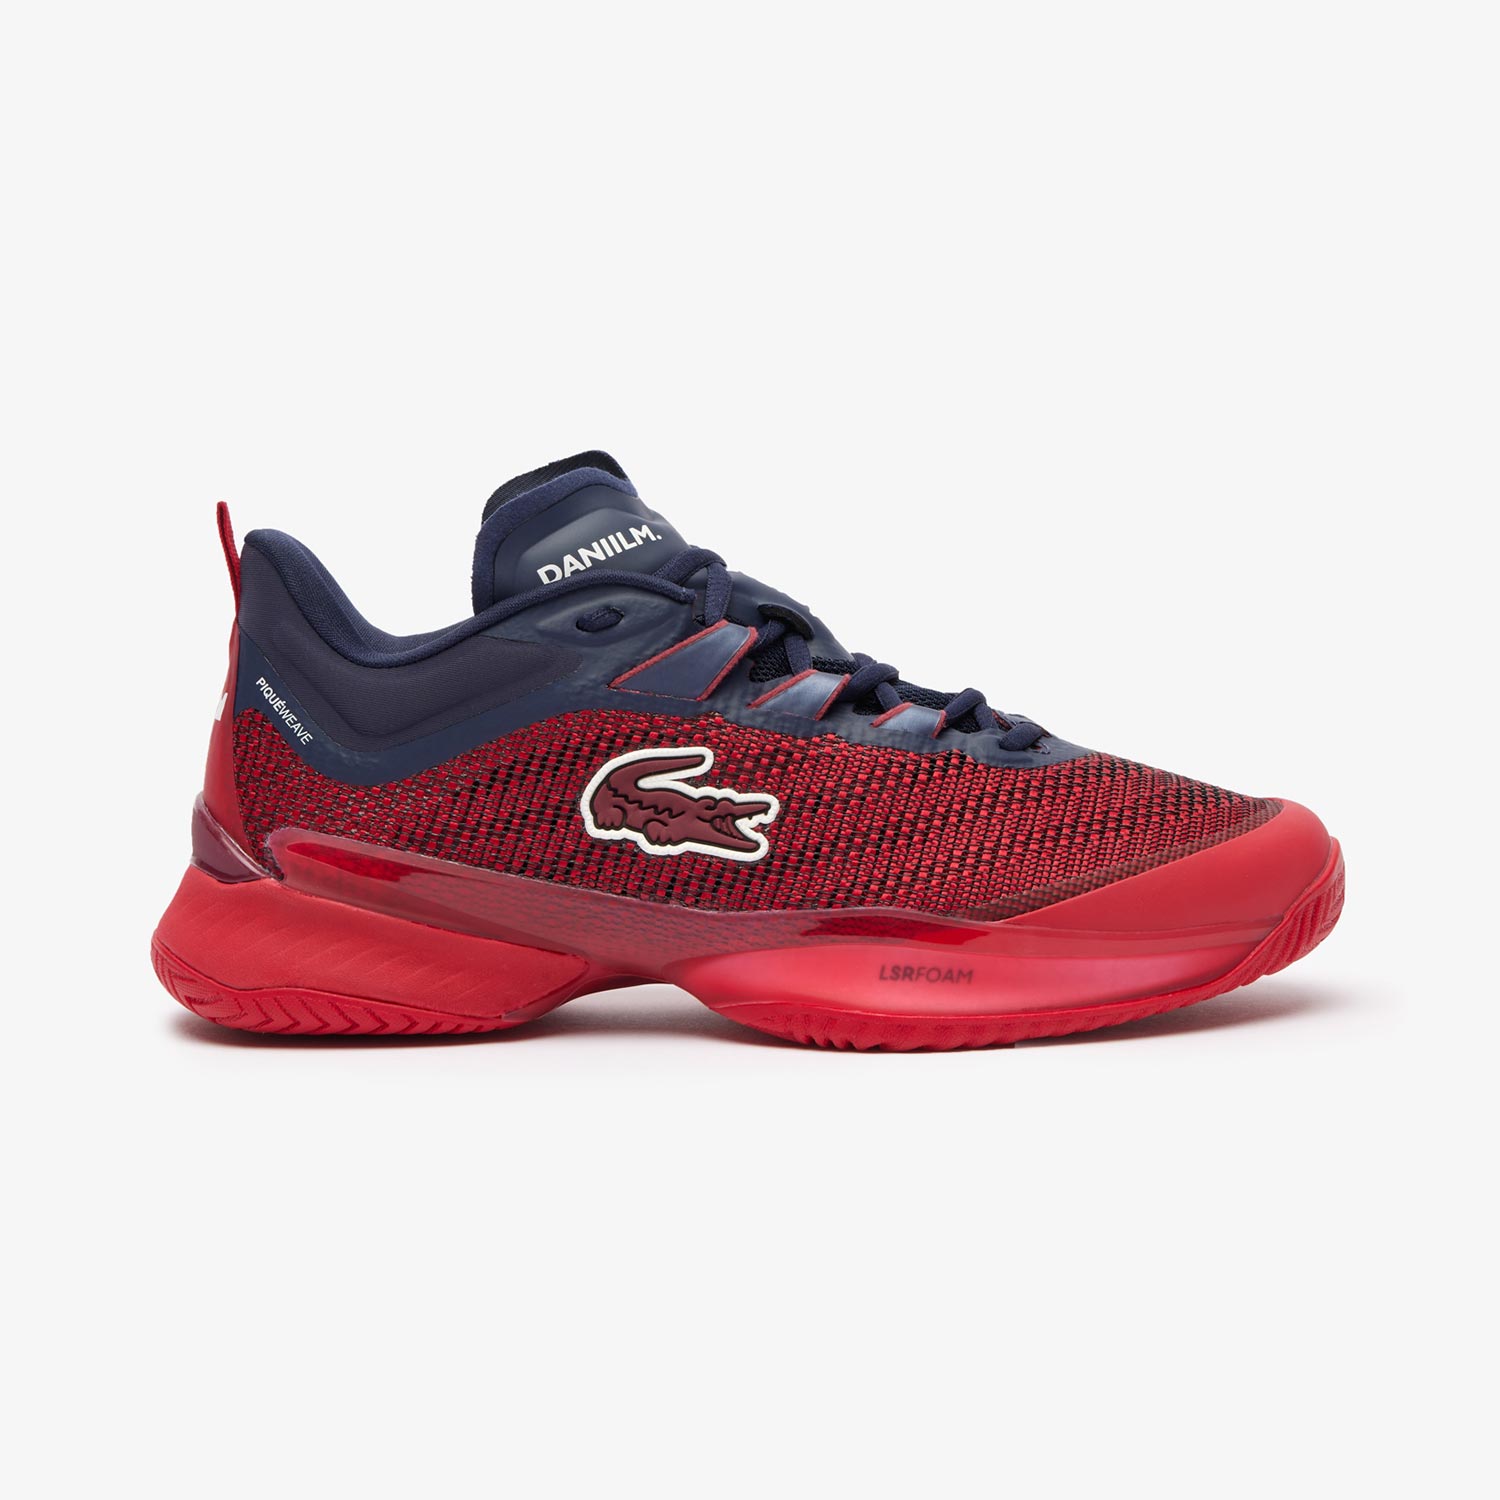 Lacoste AG-LT23 Ultra Men's Tennis Shoes - Red (1)